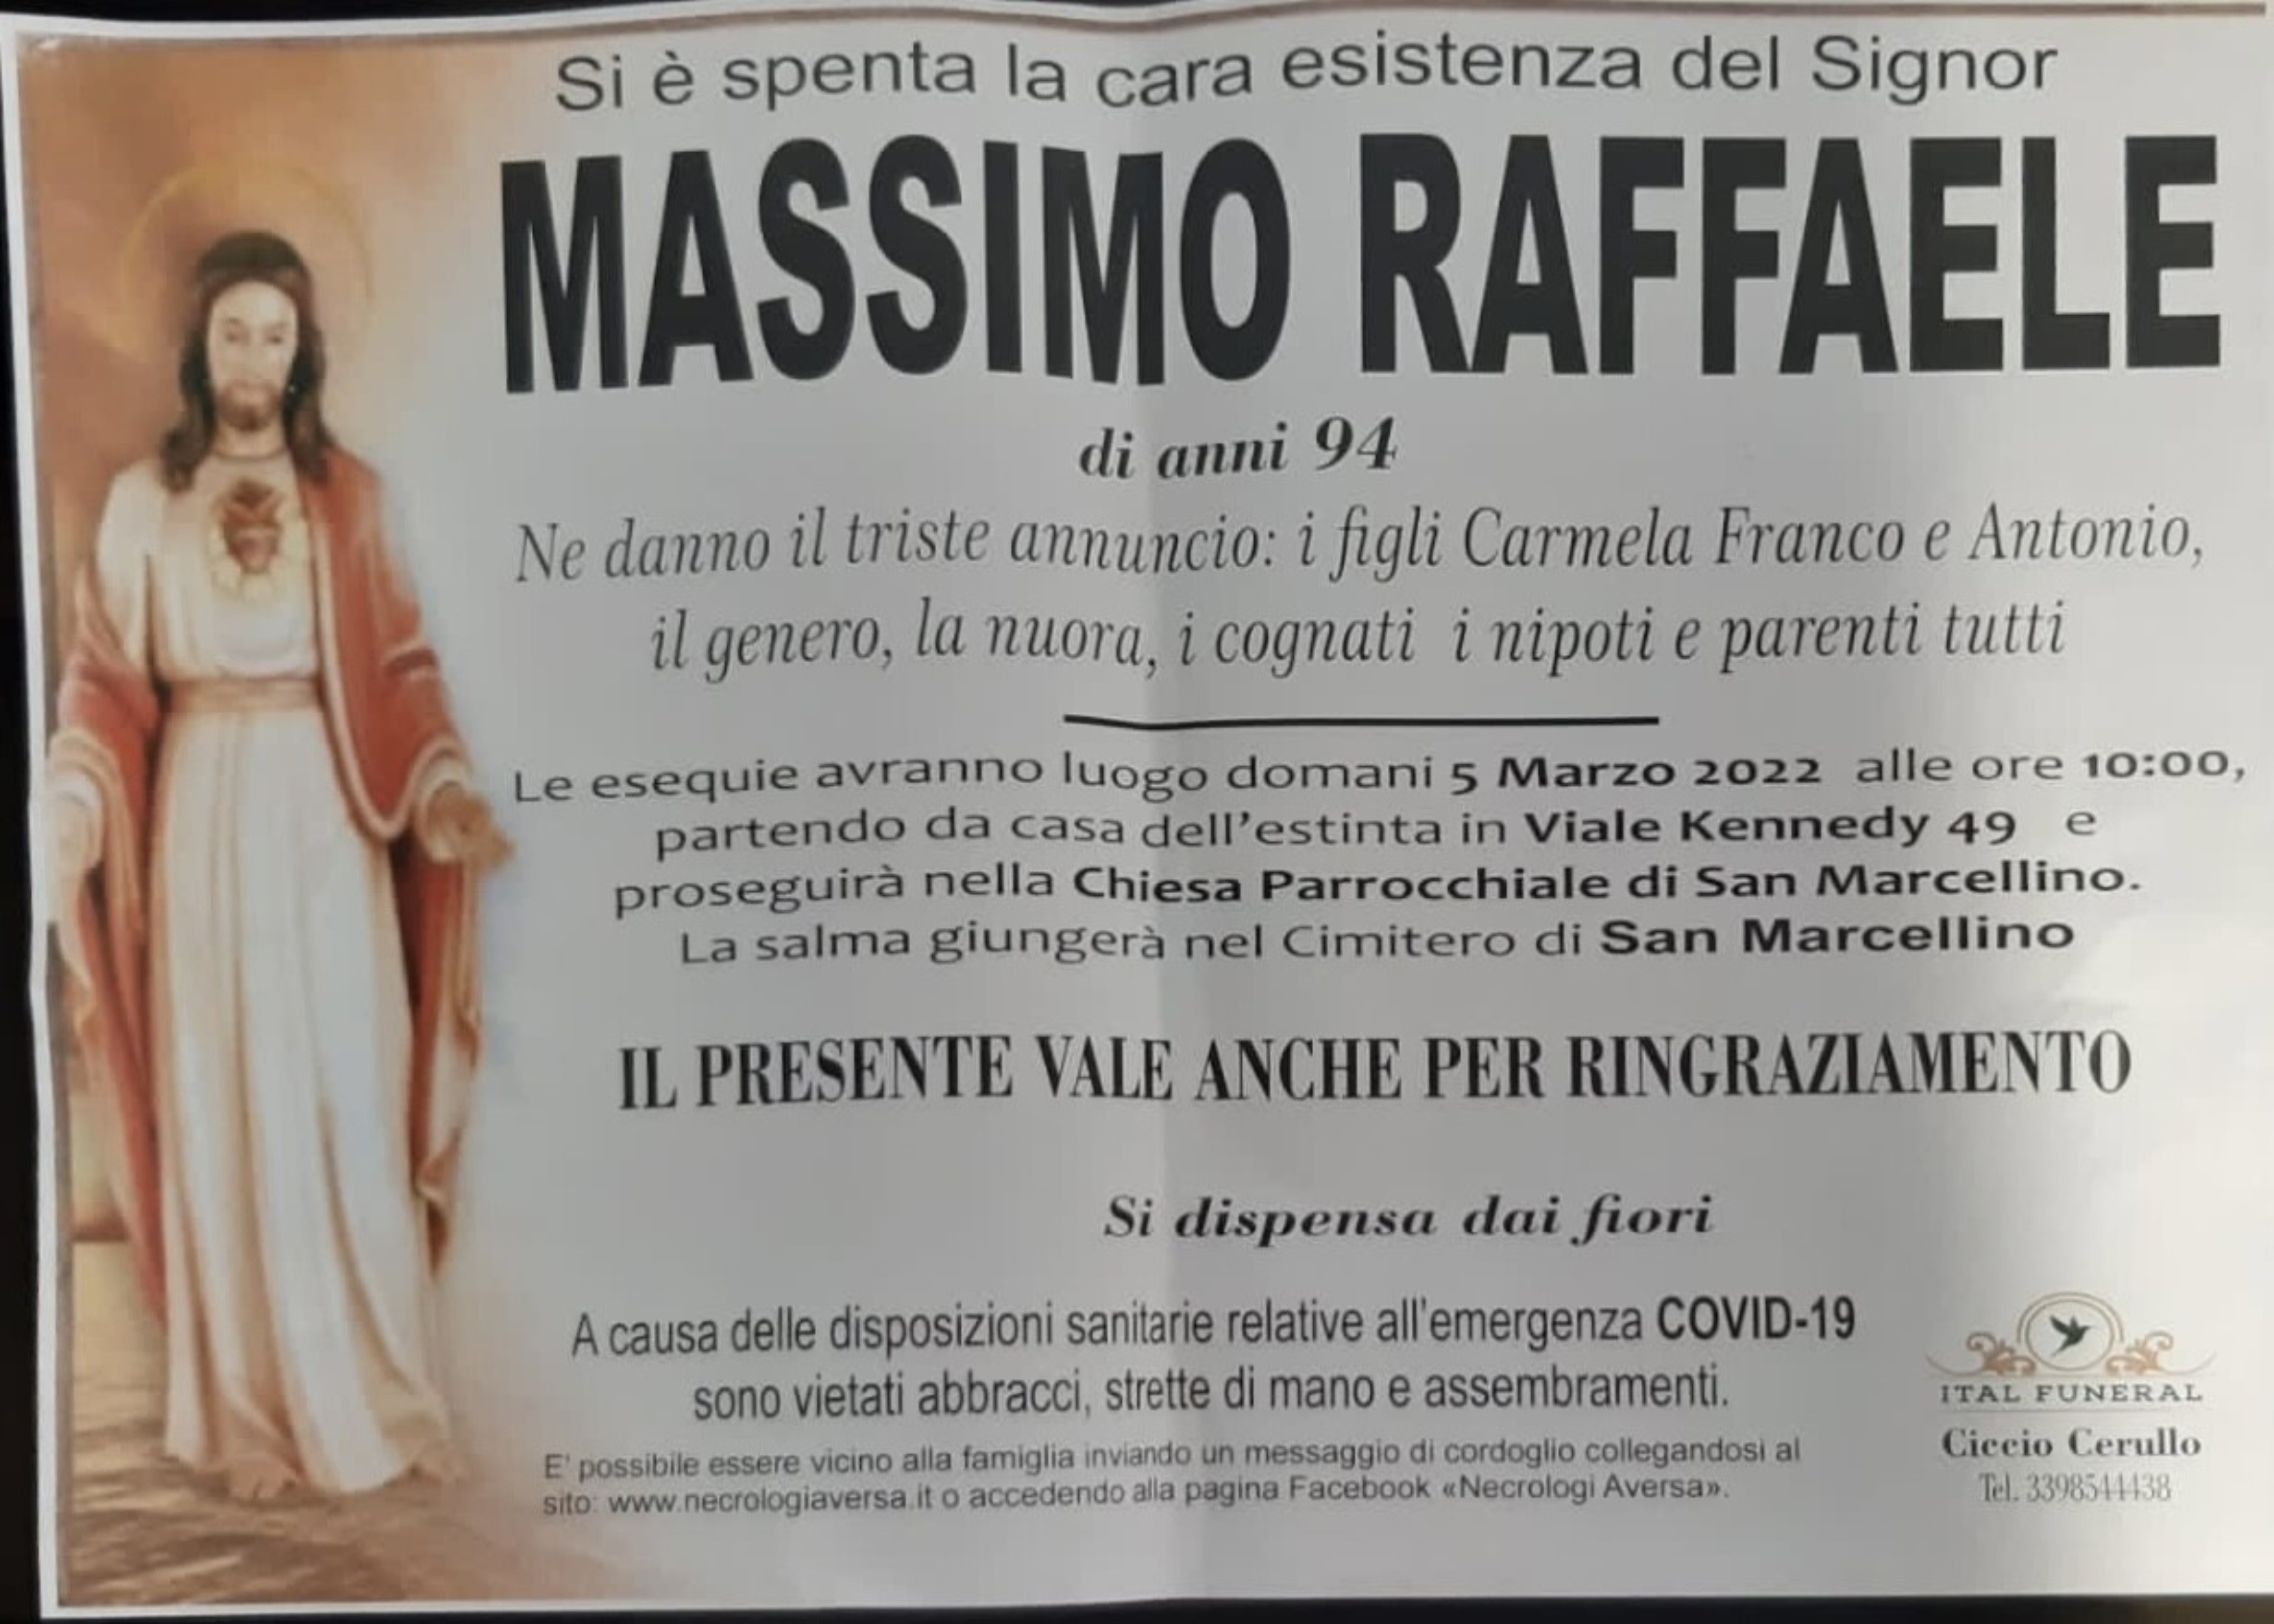 Raffaele Massimo